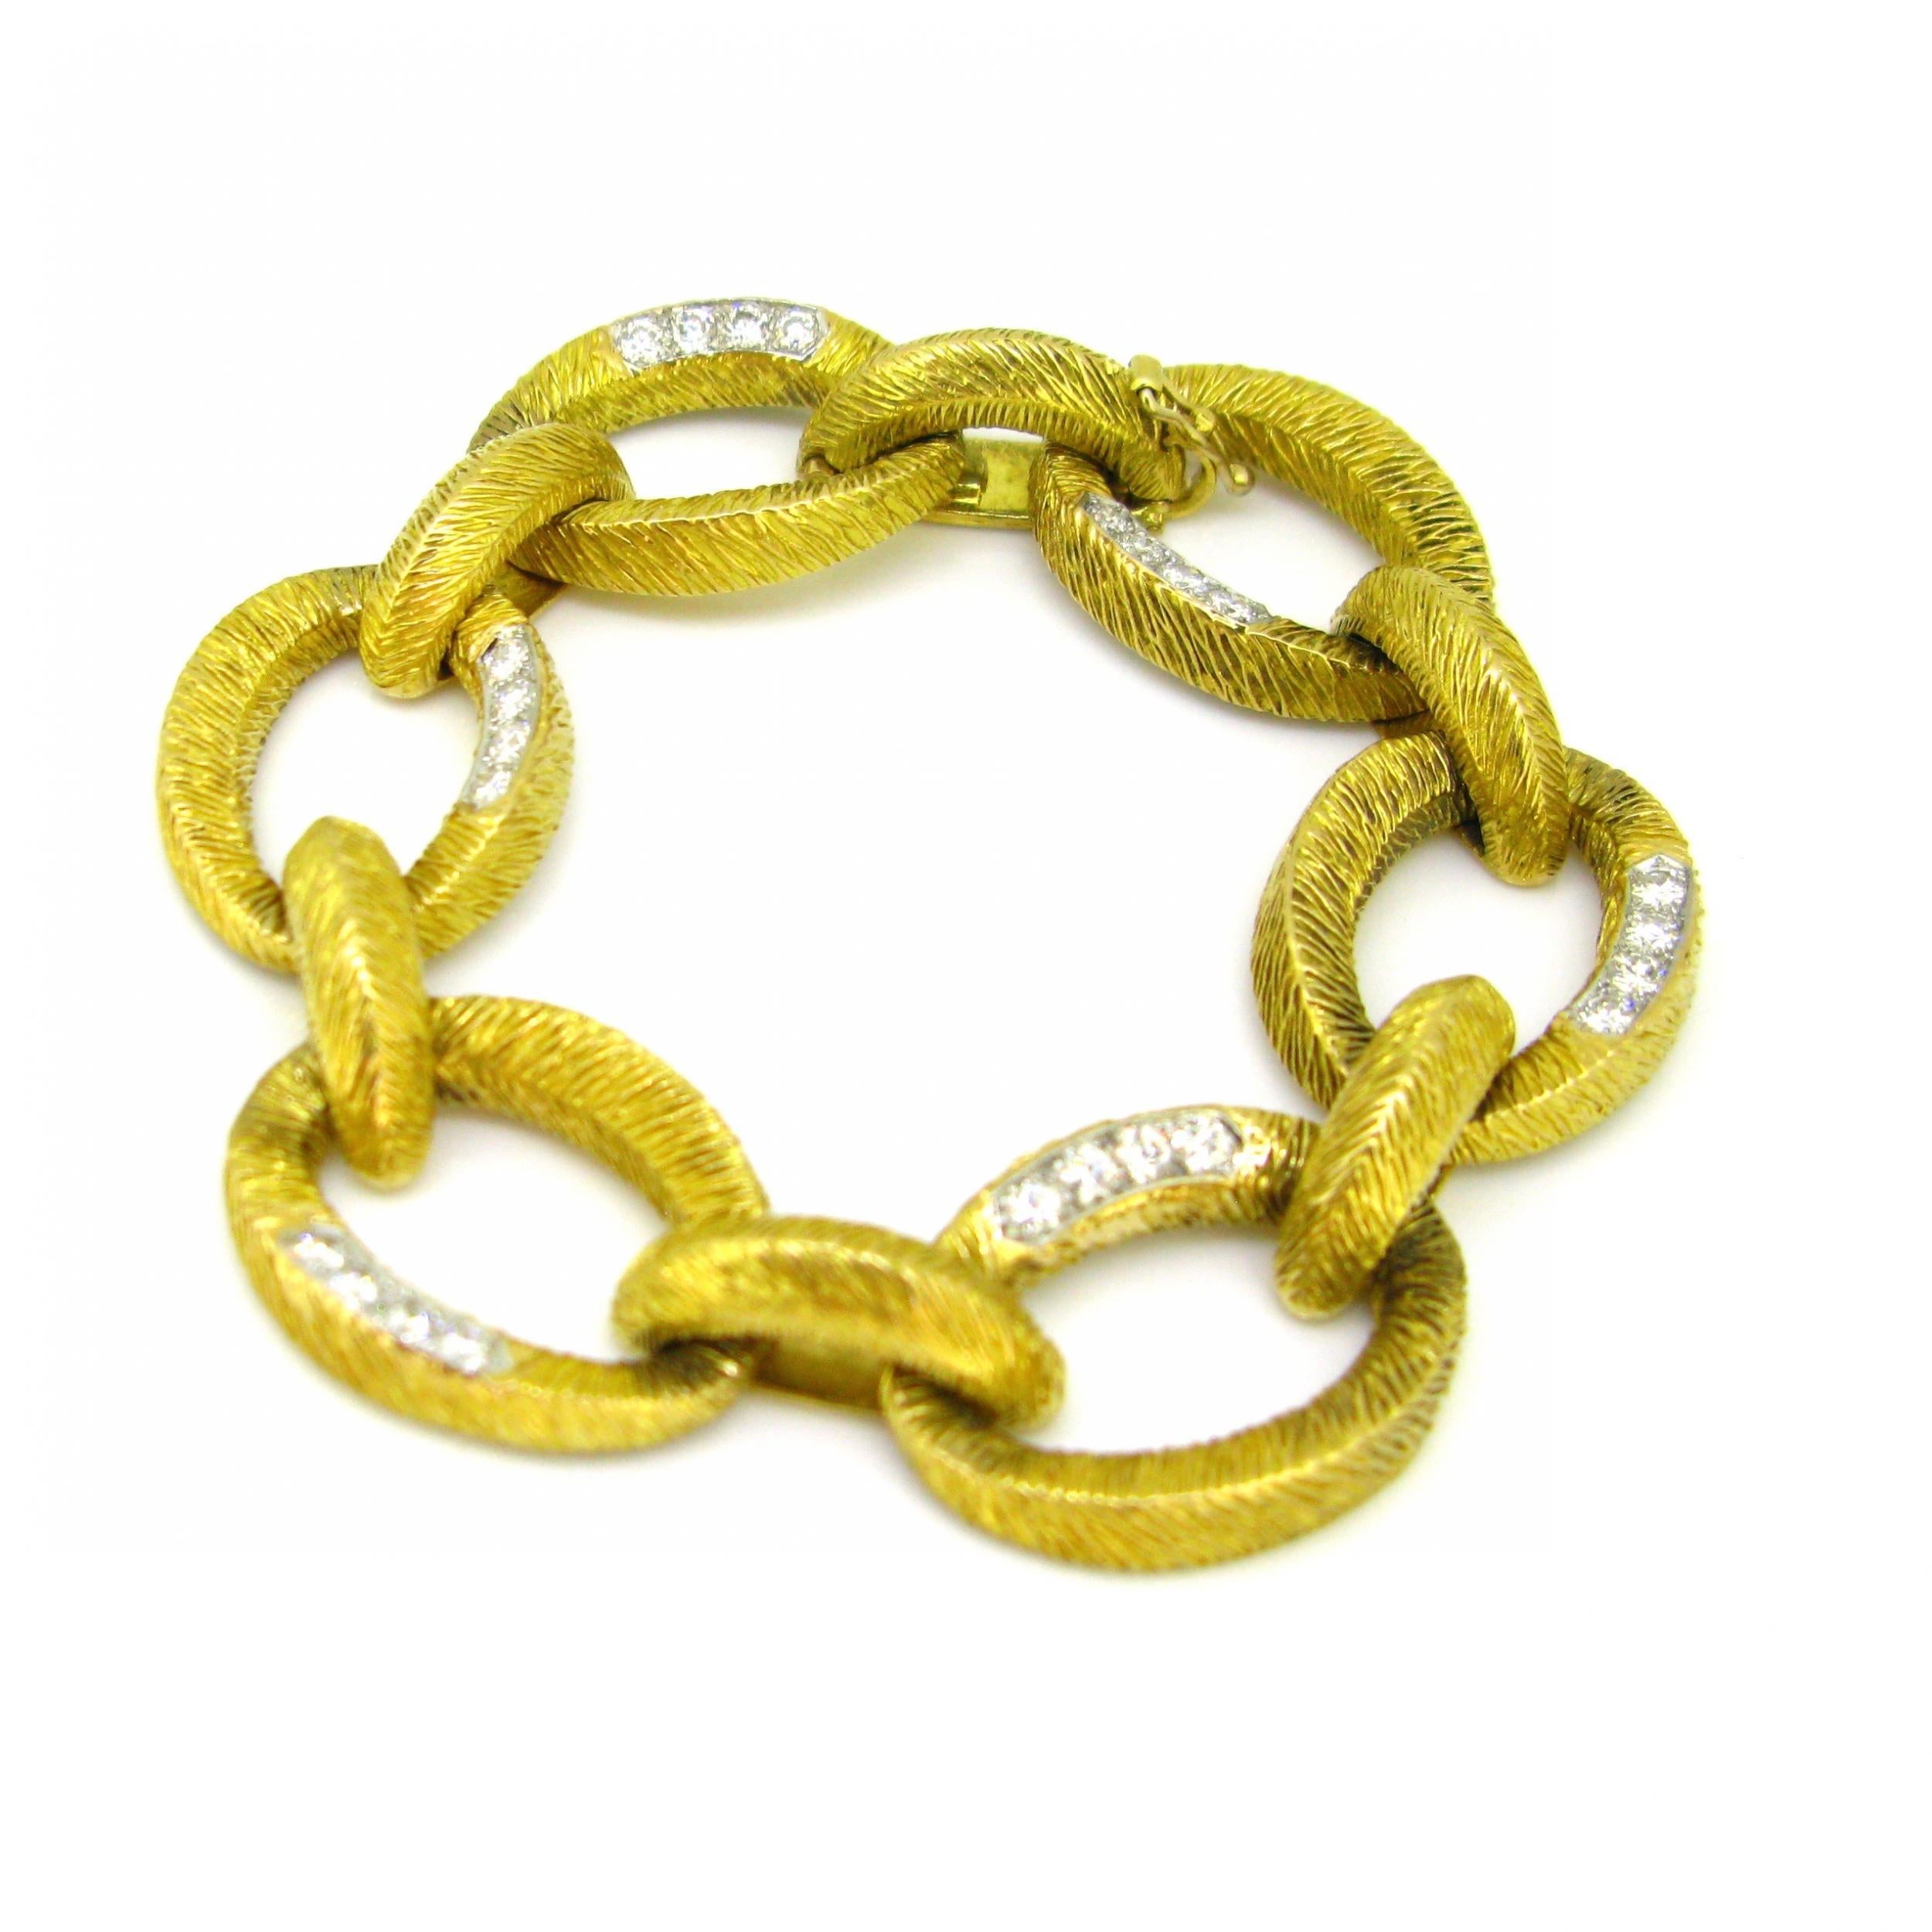 Brilliant Cut Diamonds Textured Link Bracelet, 18kt Yellow Gold and Platinum 1